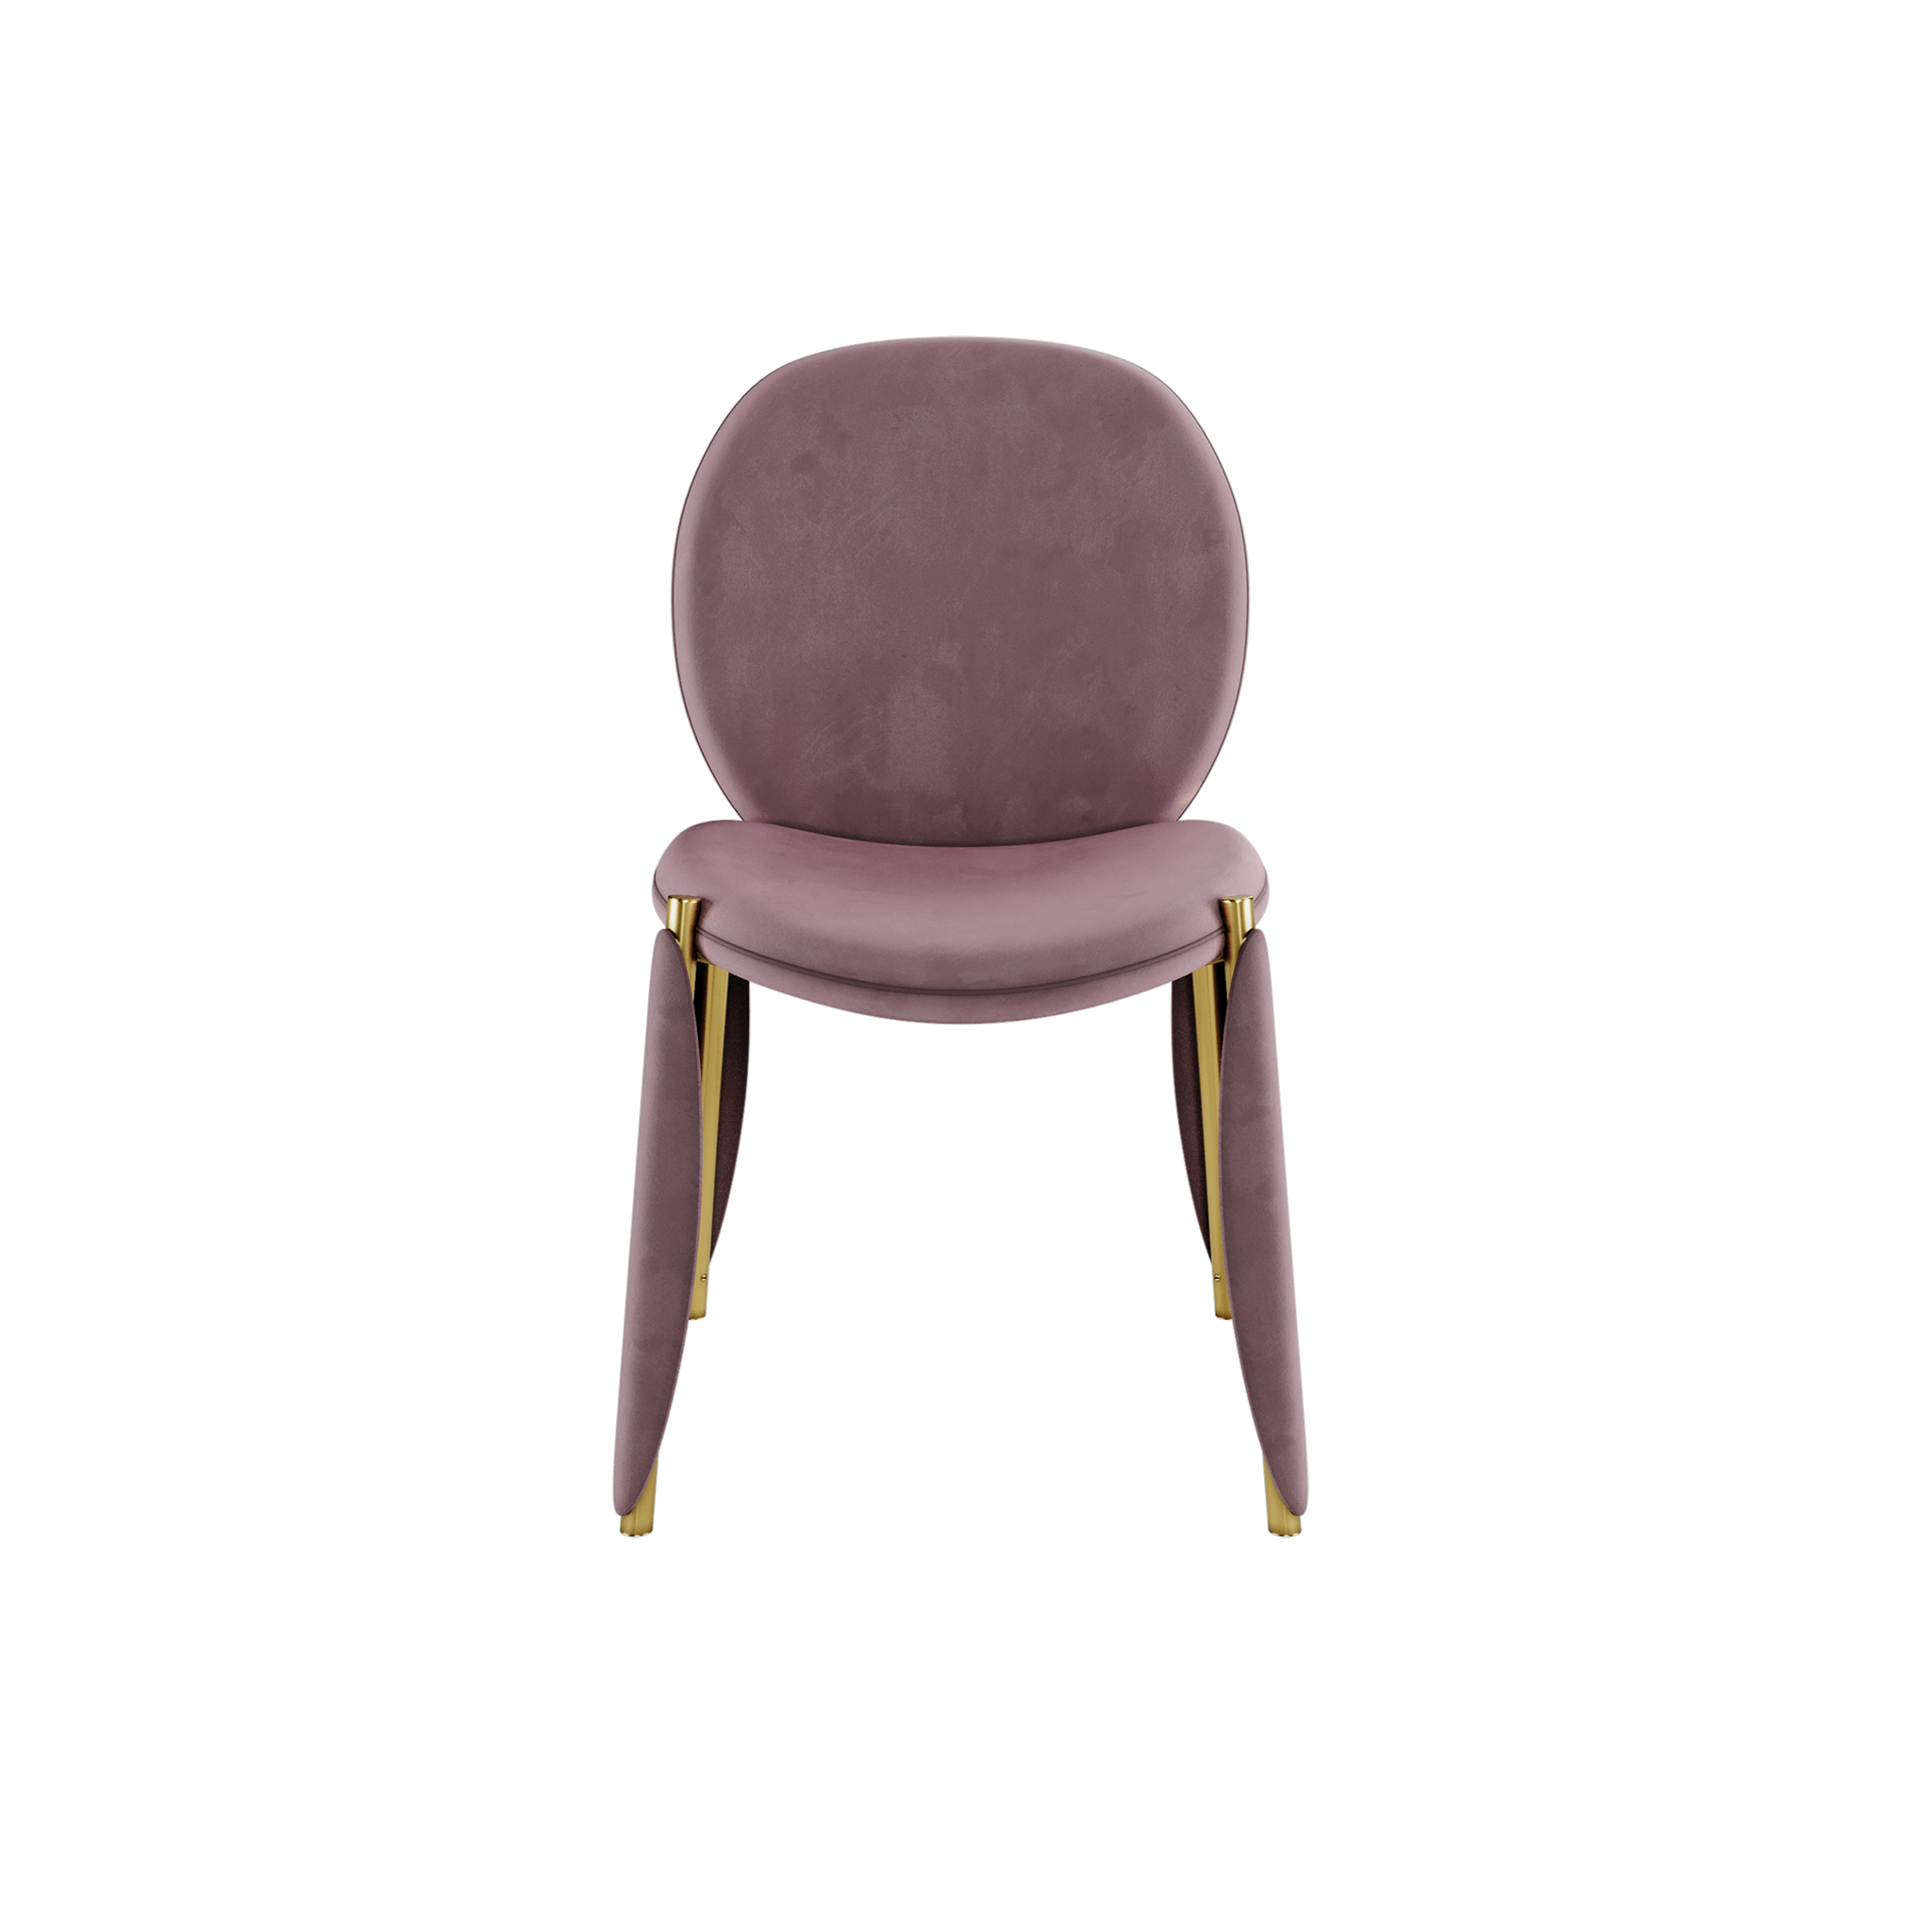 Mantis Dining Chair by Hommés Studio